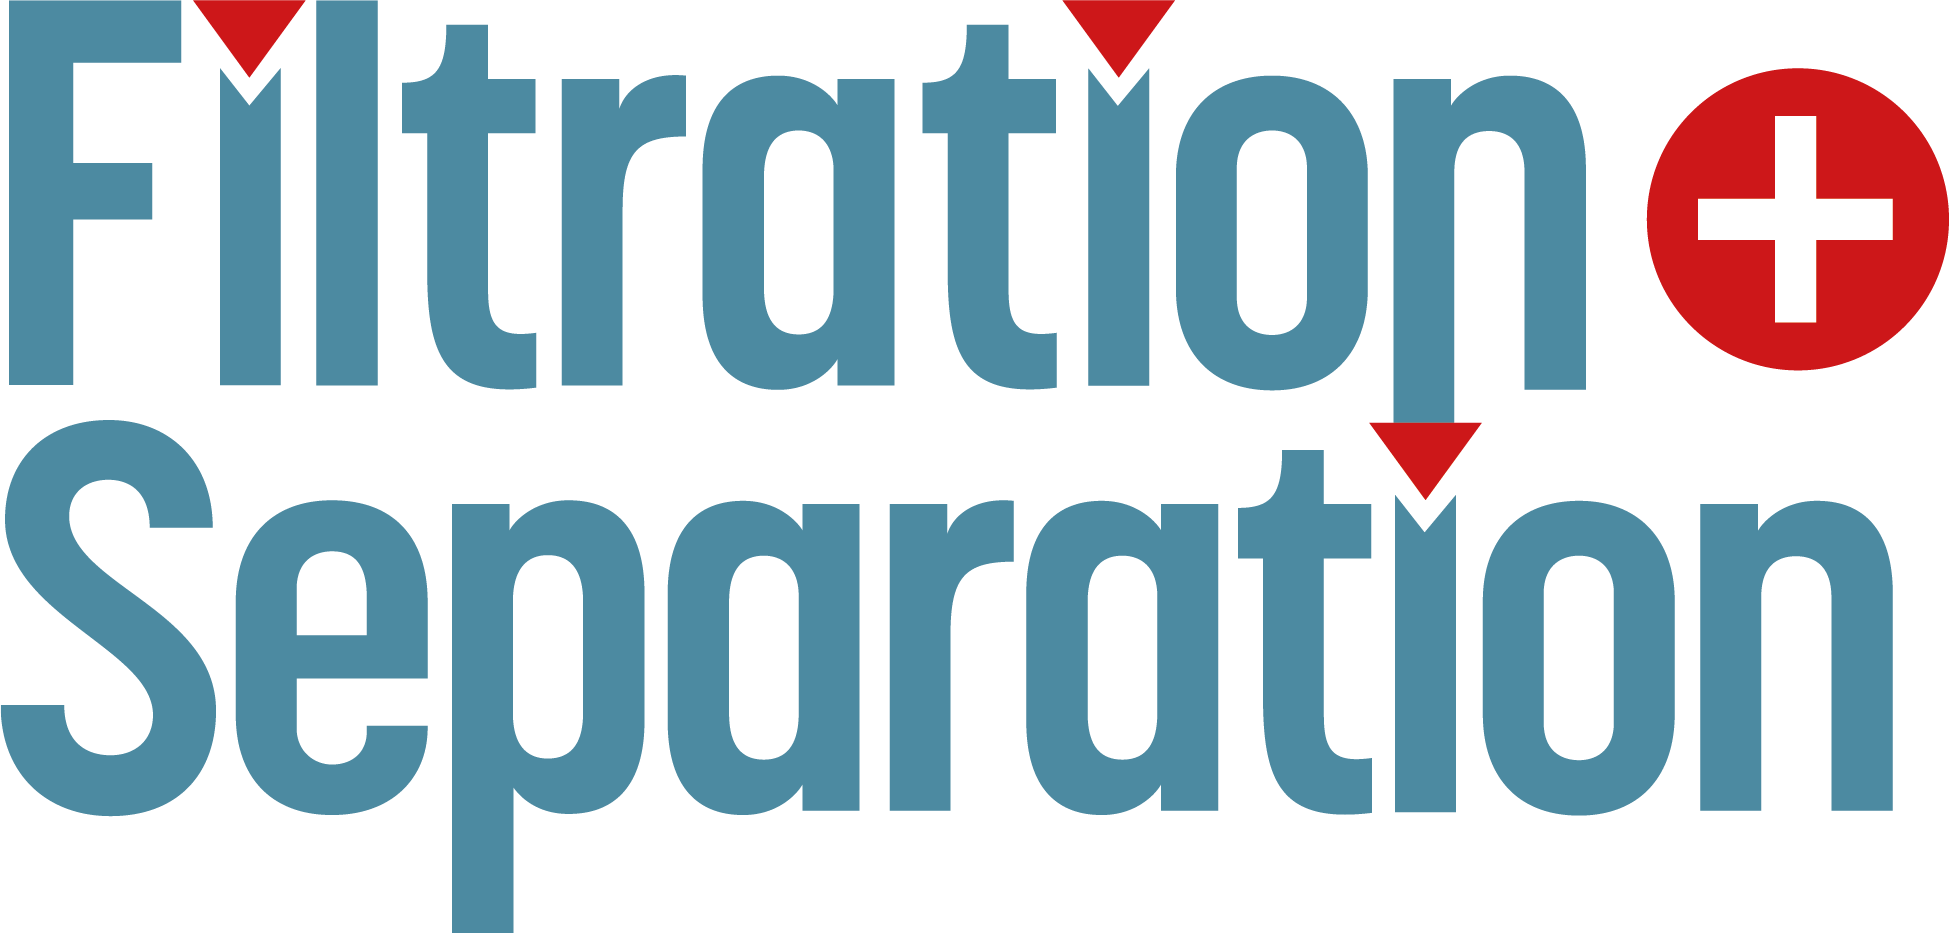 Filtration+Separation magazine